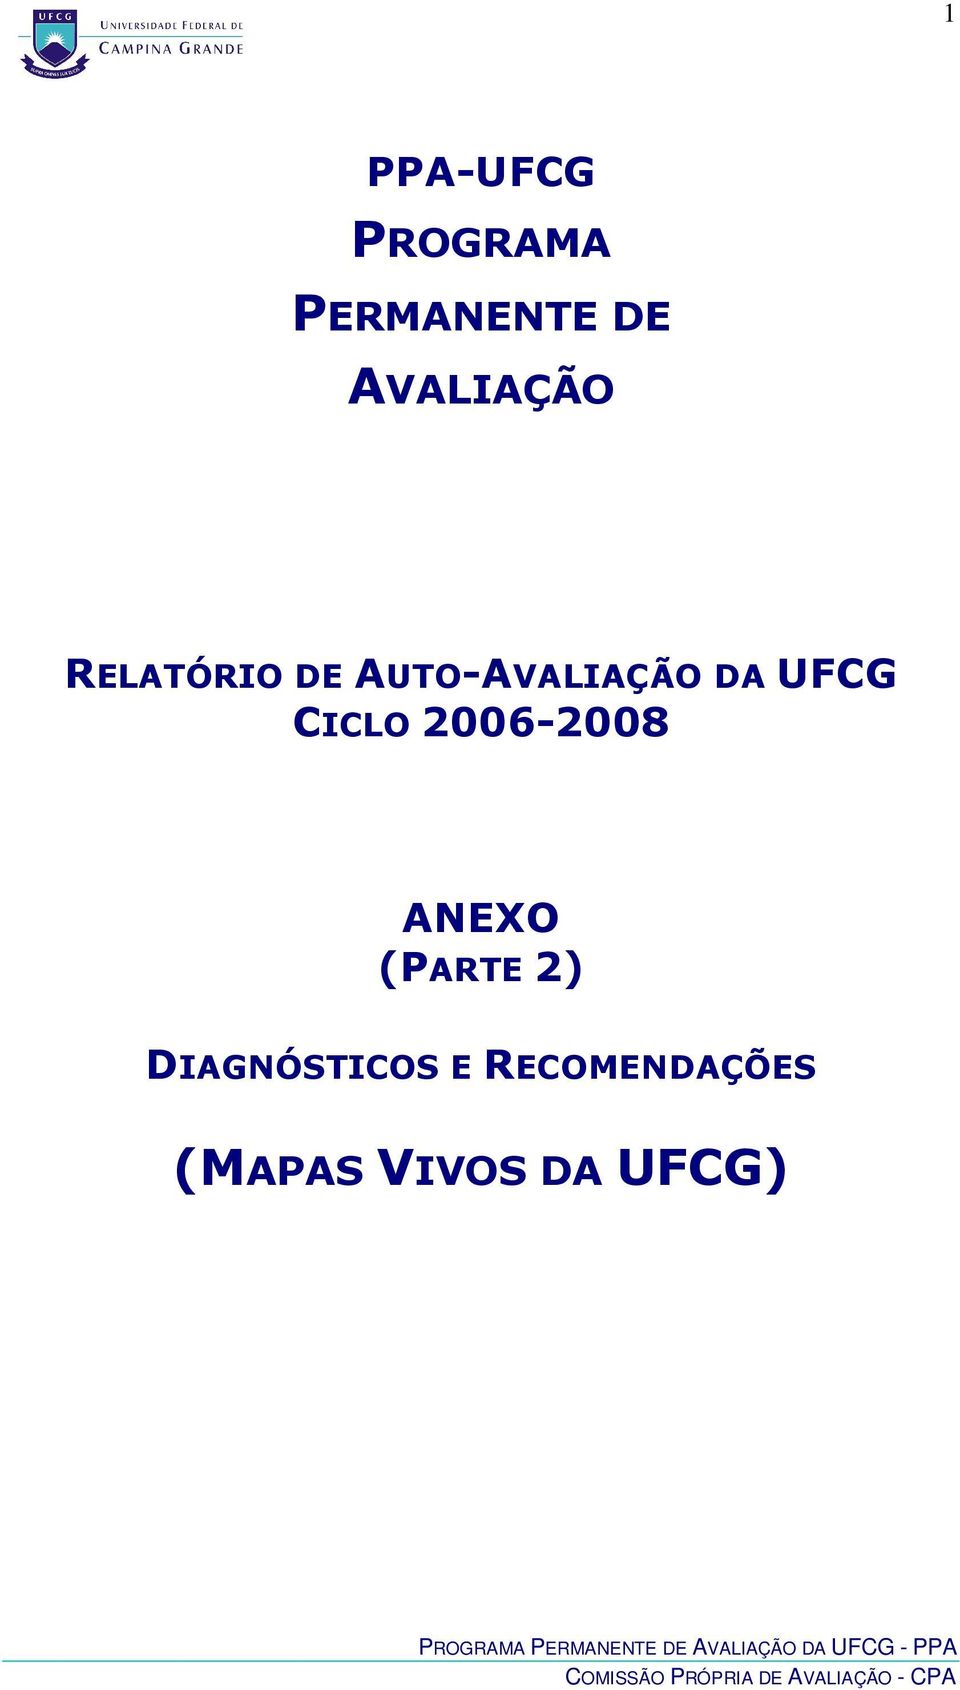 UFCG CICLO 2006-2008 ANEXO (PARTE 2)